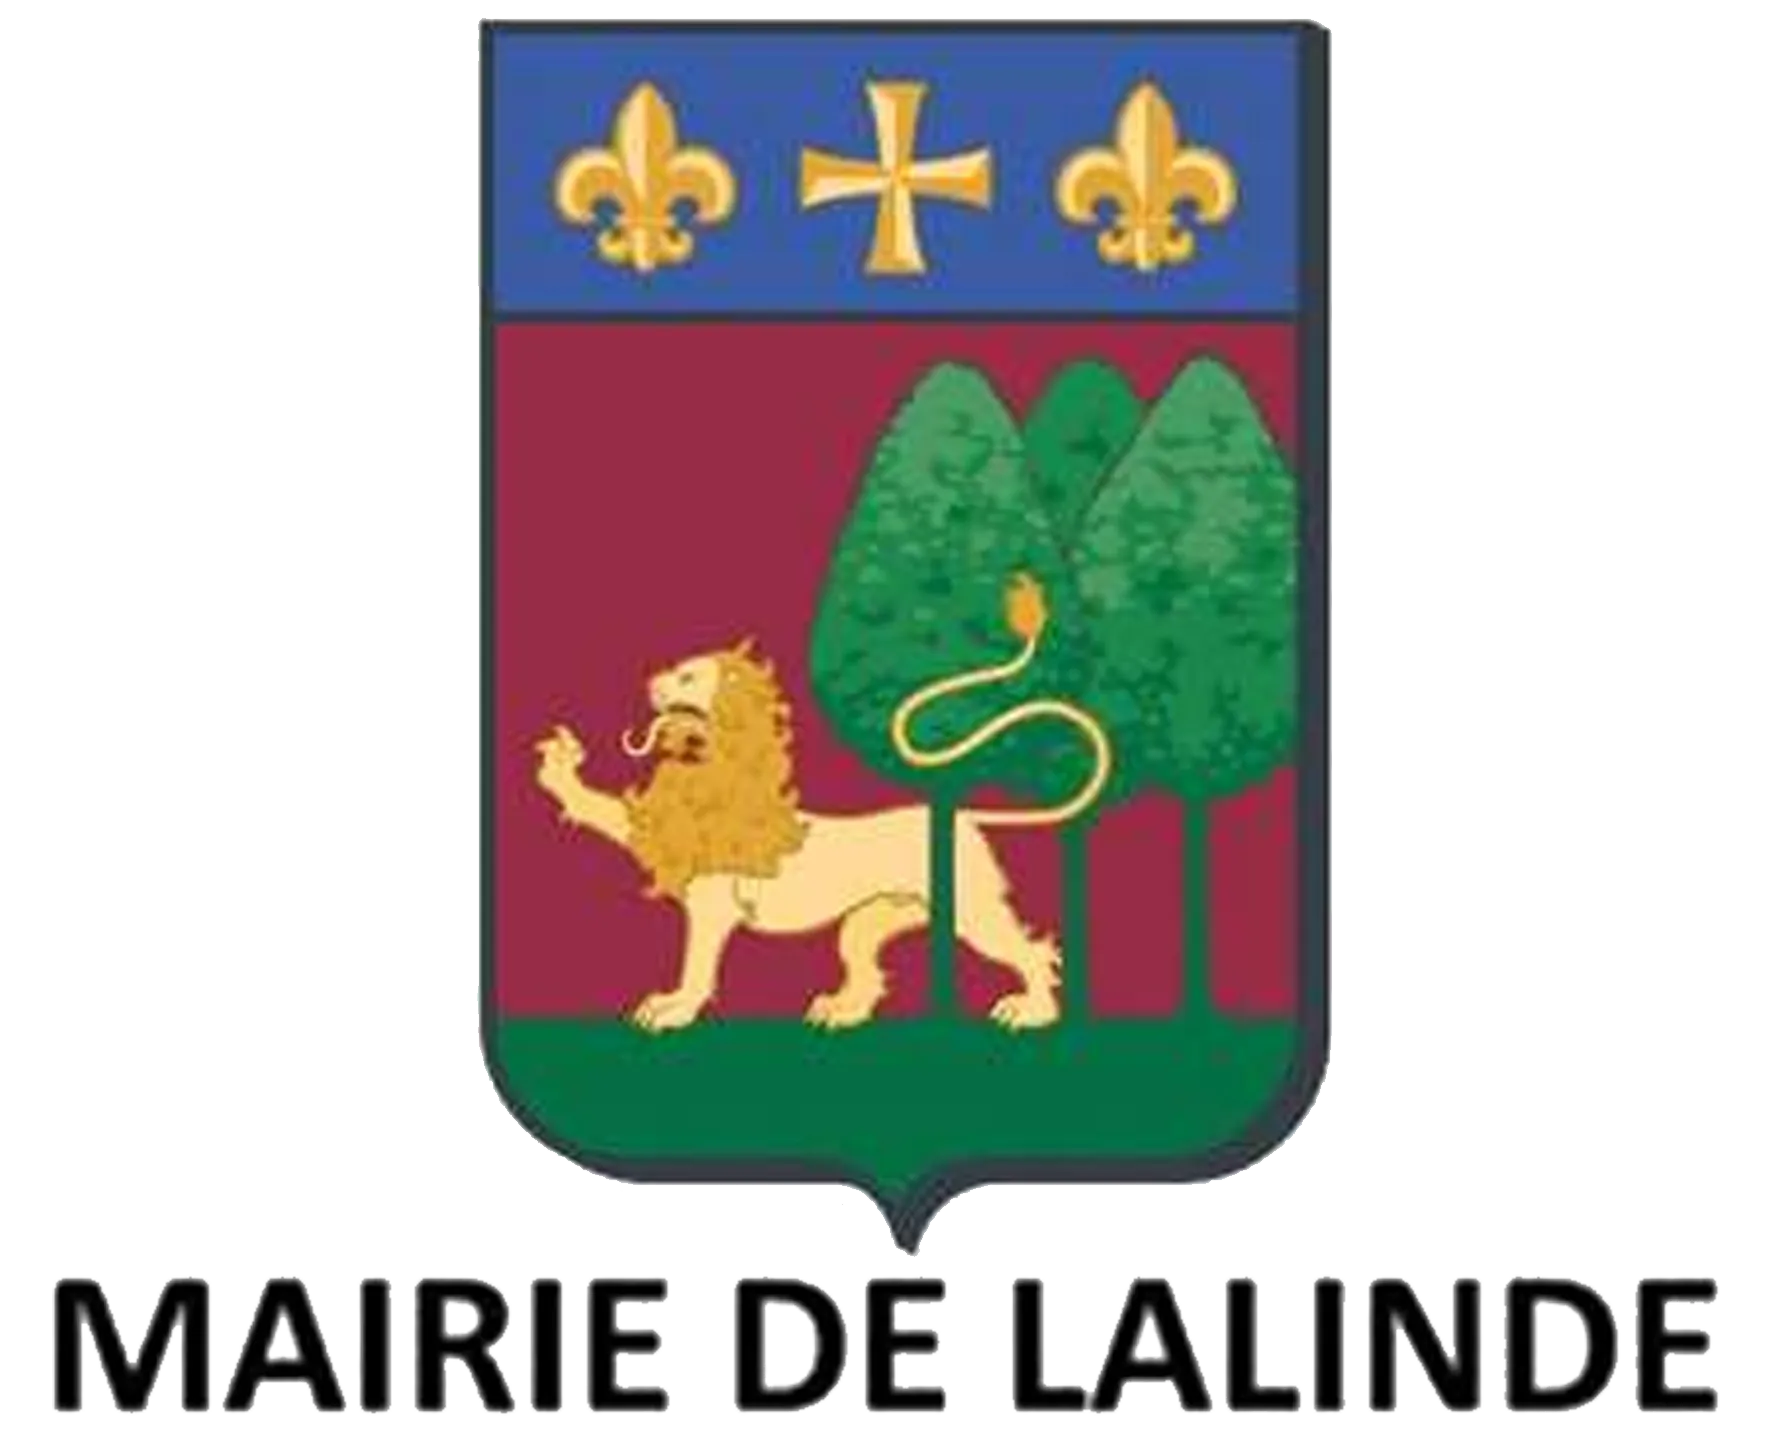 Mairie de Lalinde